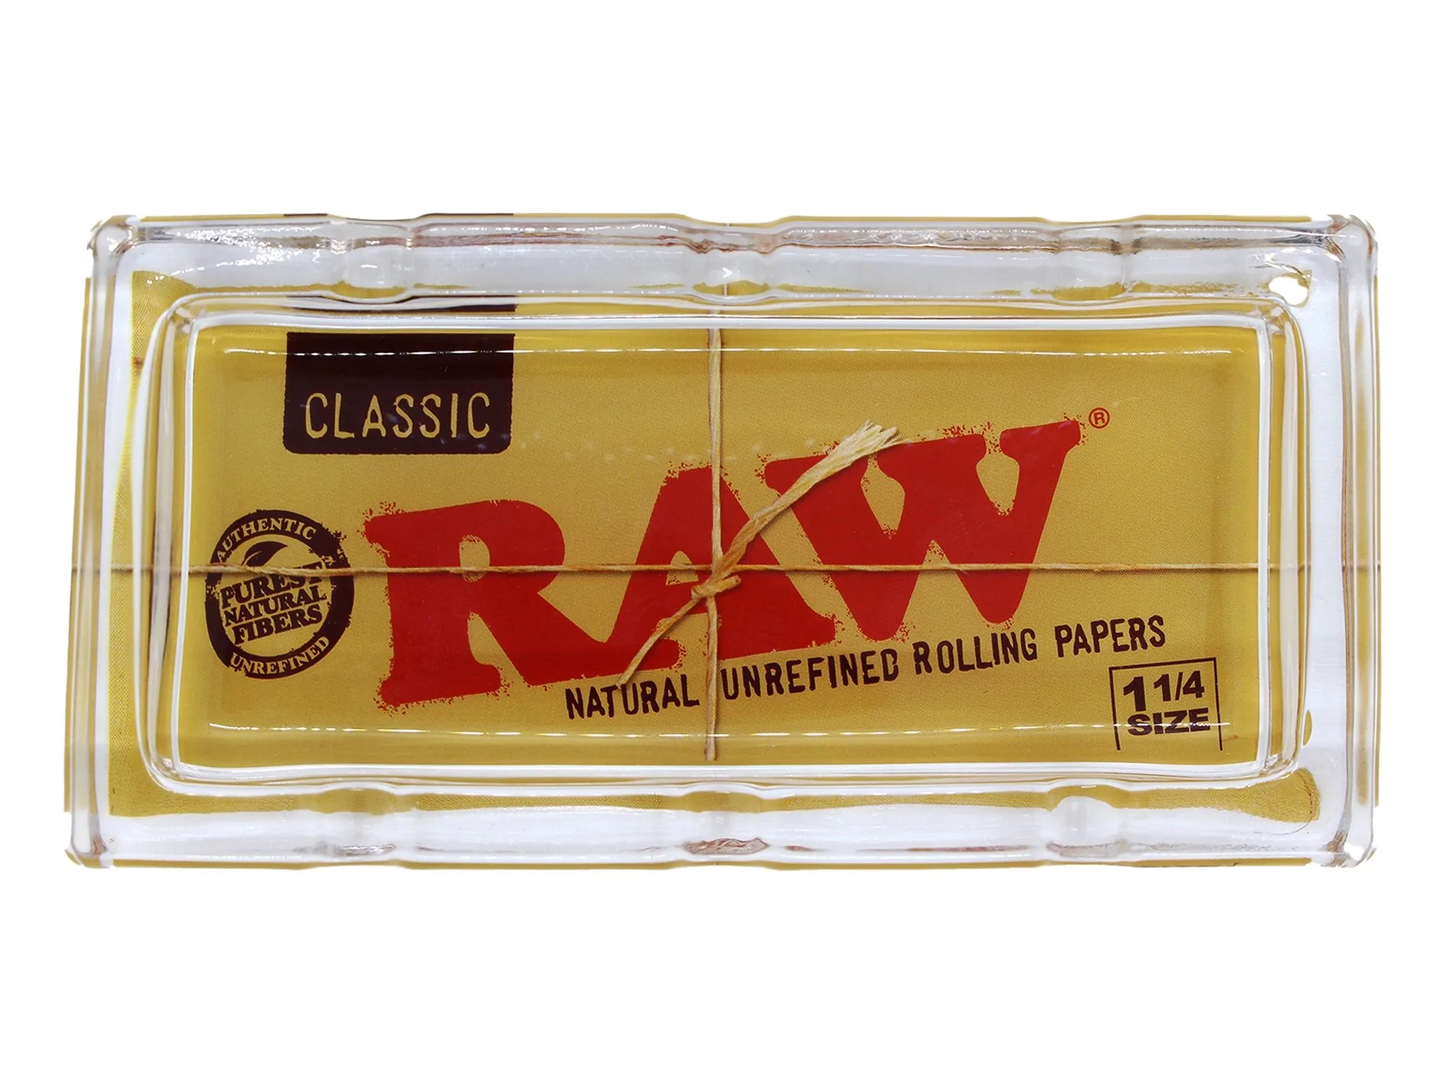 RAW - Ashtray, Glass ' Classic'